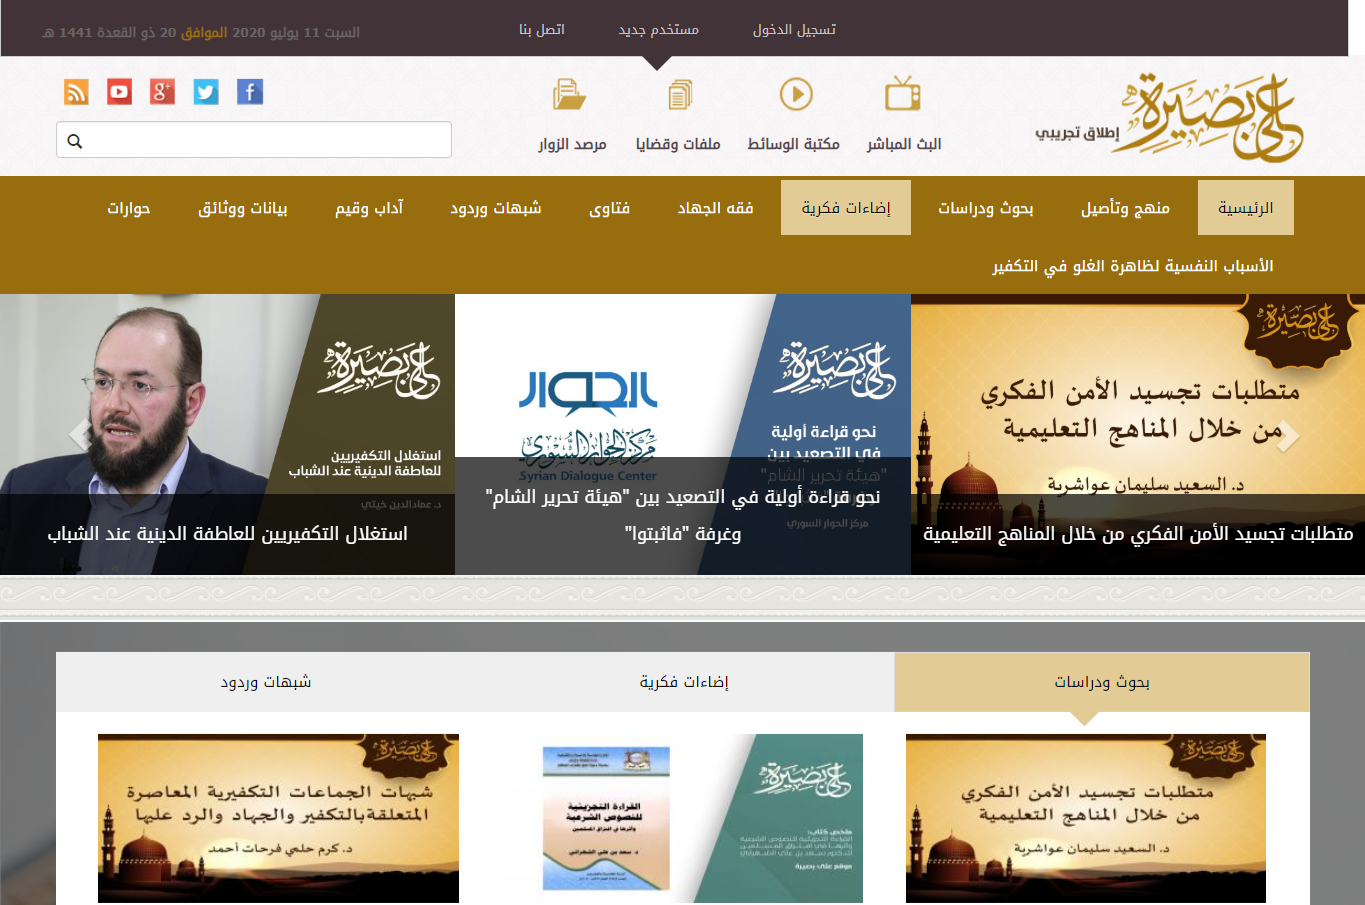 Ali Basira Foundation website